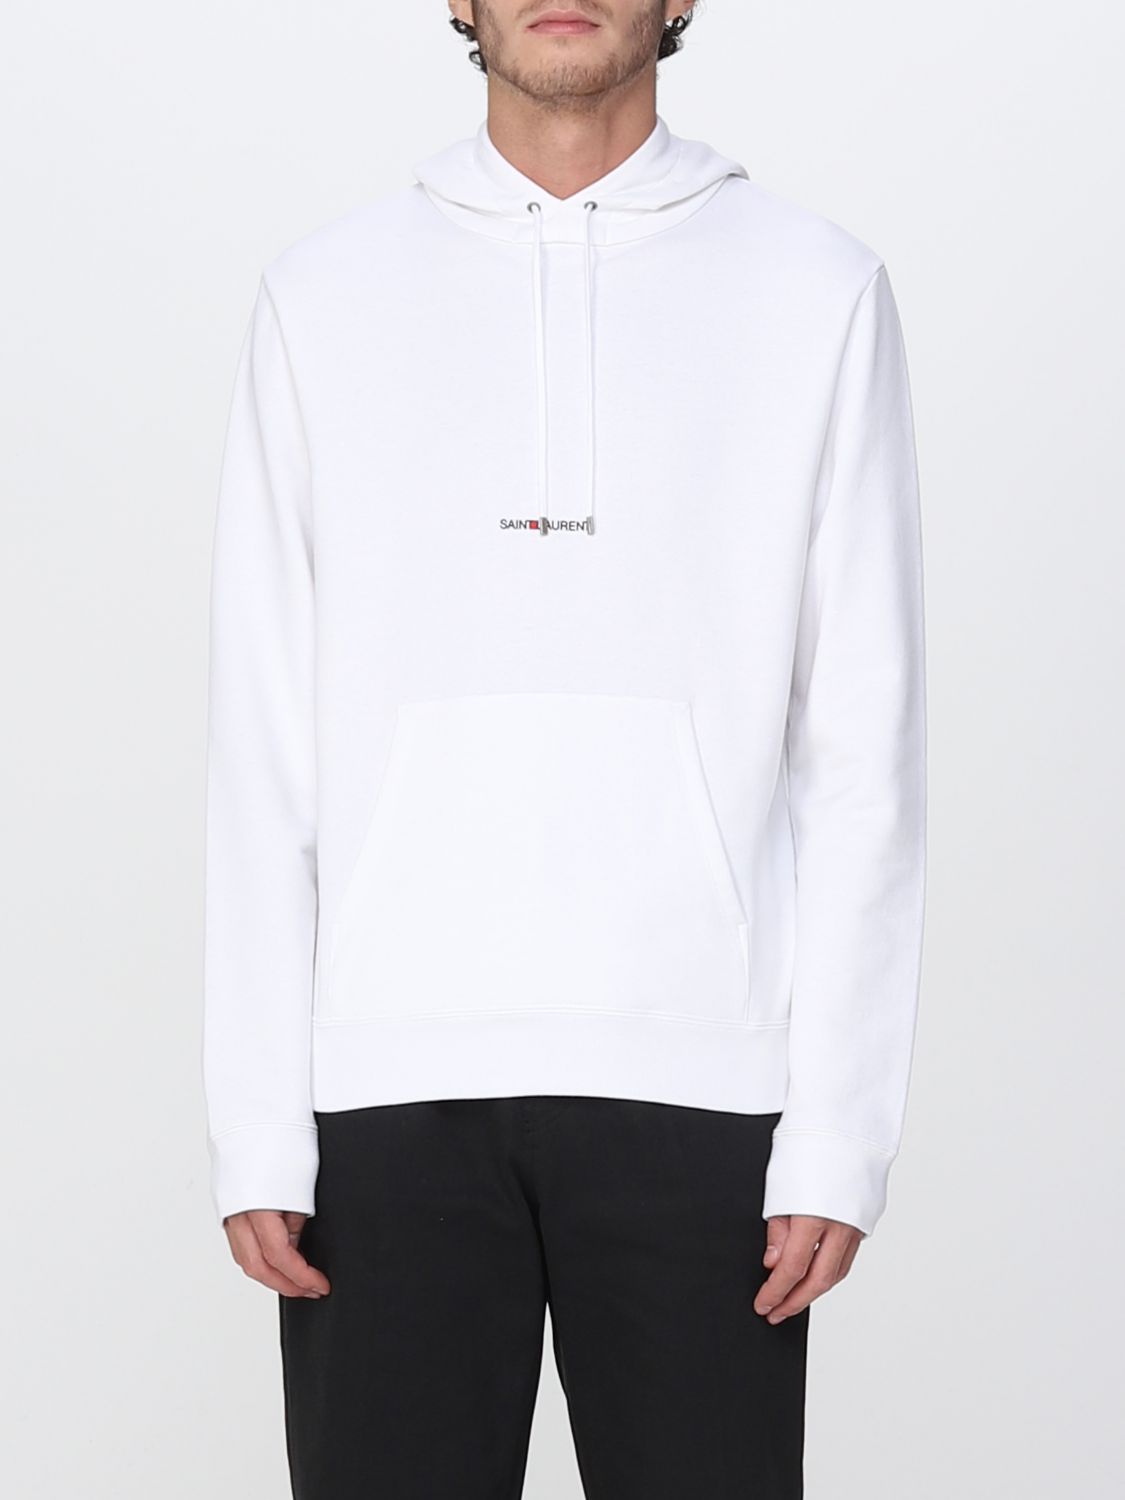 Sweatshirt Saint Laurent: Sweatshirt Saint Laurent homme blanc 1